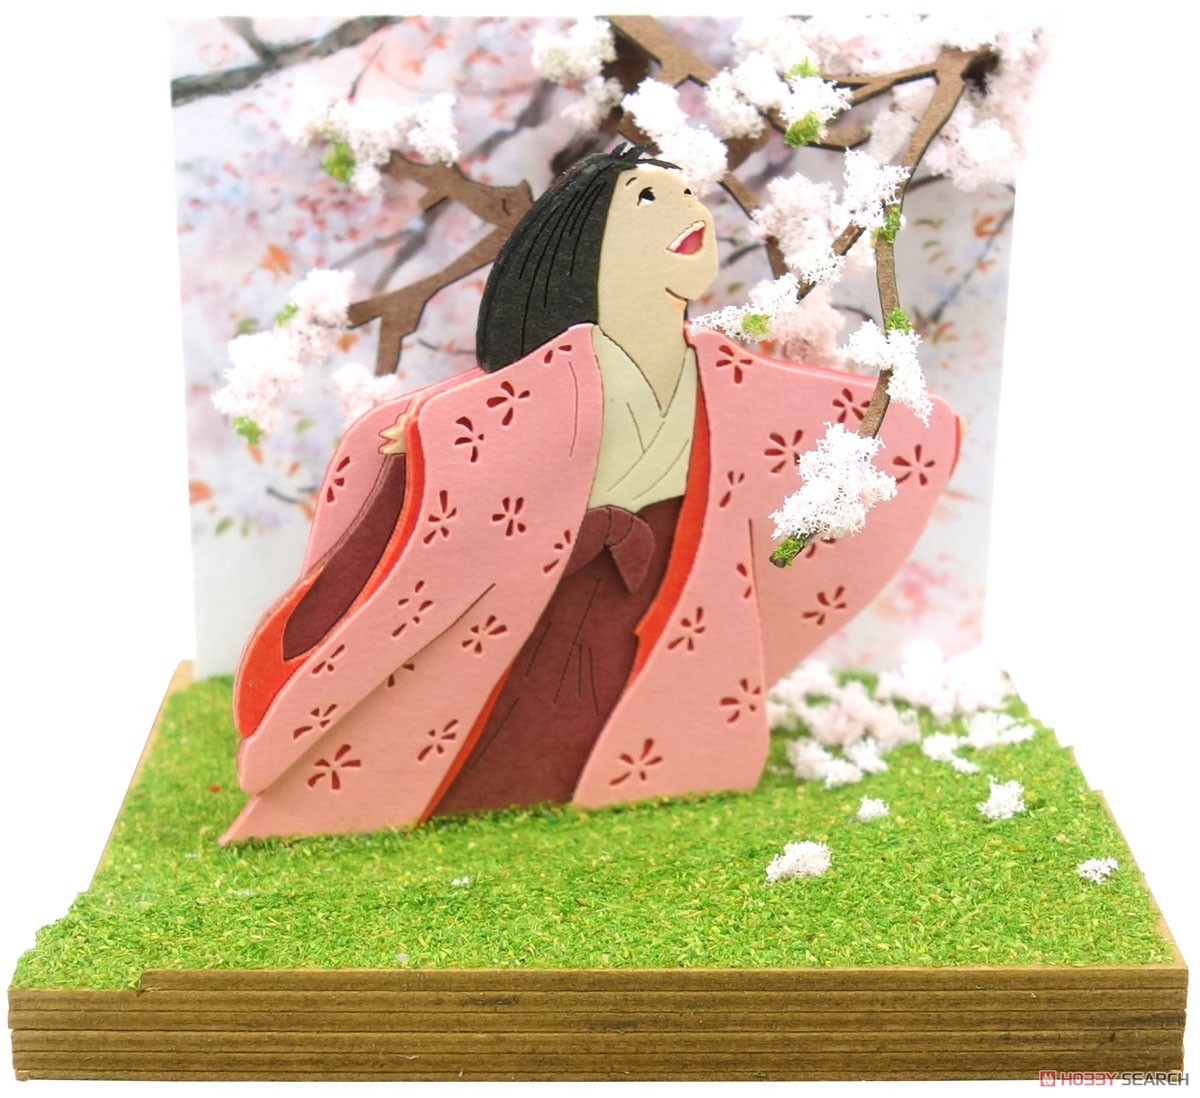 [Miniatuart] Studio Ghibli Mini : The Tale of the Princess Kaguya Under the Wild Cherry Tree (Assemble kit) (Railway Related Items) Item picture1